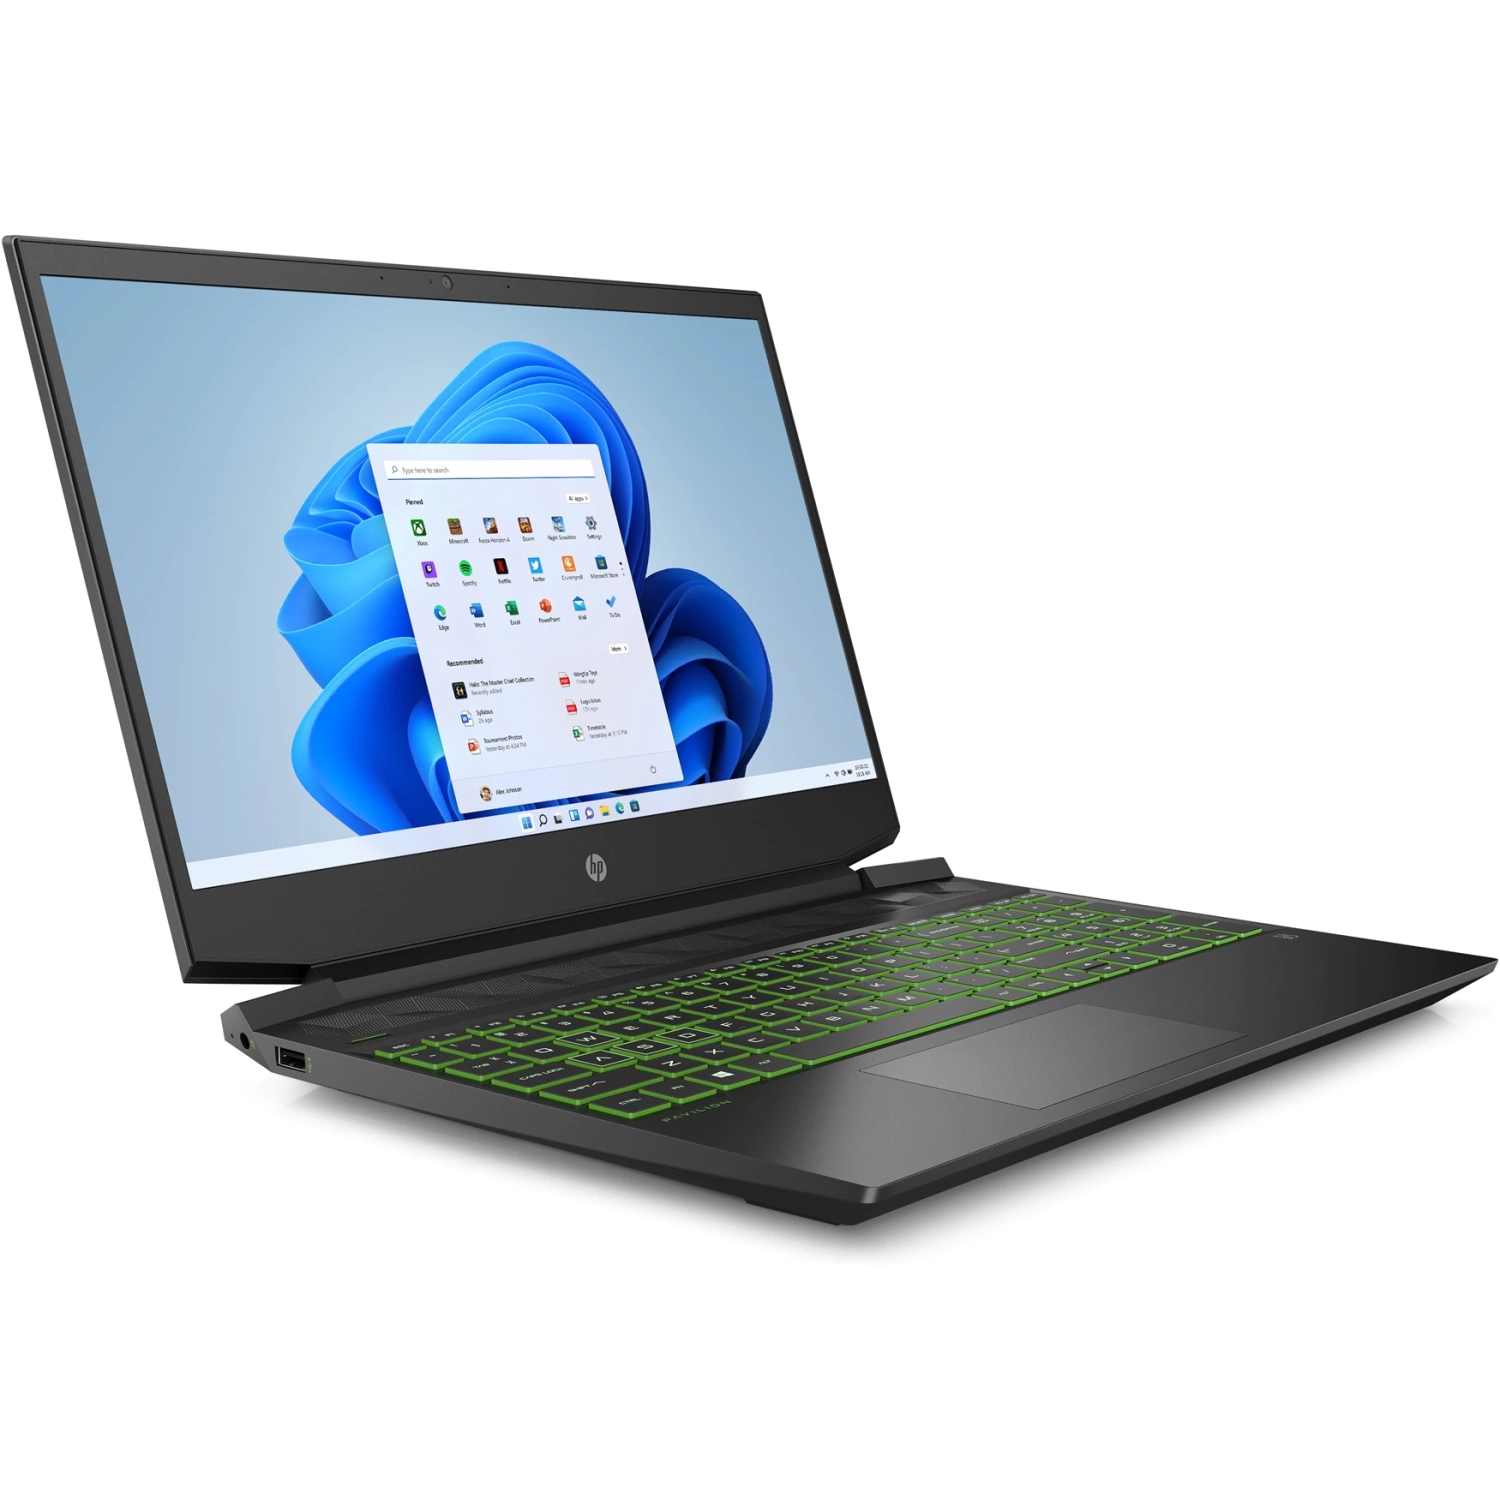 HP Pavilion 15.6" Gaming Laptop (Intel Core i5-10300H, 8GB RAM, 256GB SSD, Windows 10, NVIDIA GeForce GTX 1650) - 15-dk1056wm